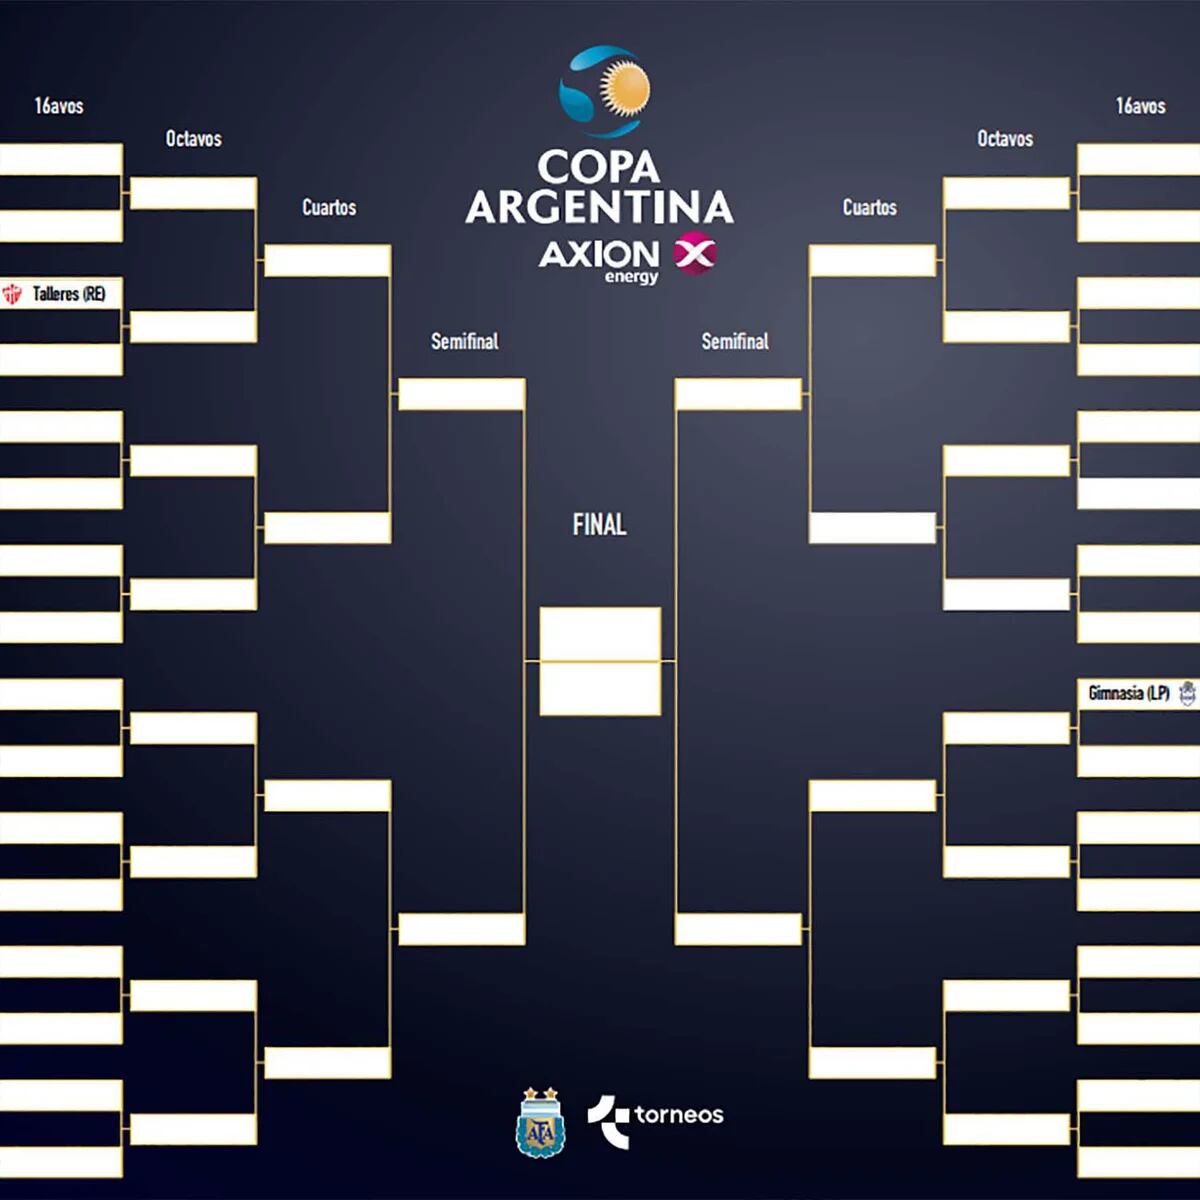 Prediction Talleres Remedios vs Deportivo Armenio: 09/10/2023 - Argentina -  Prim B Metro